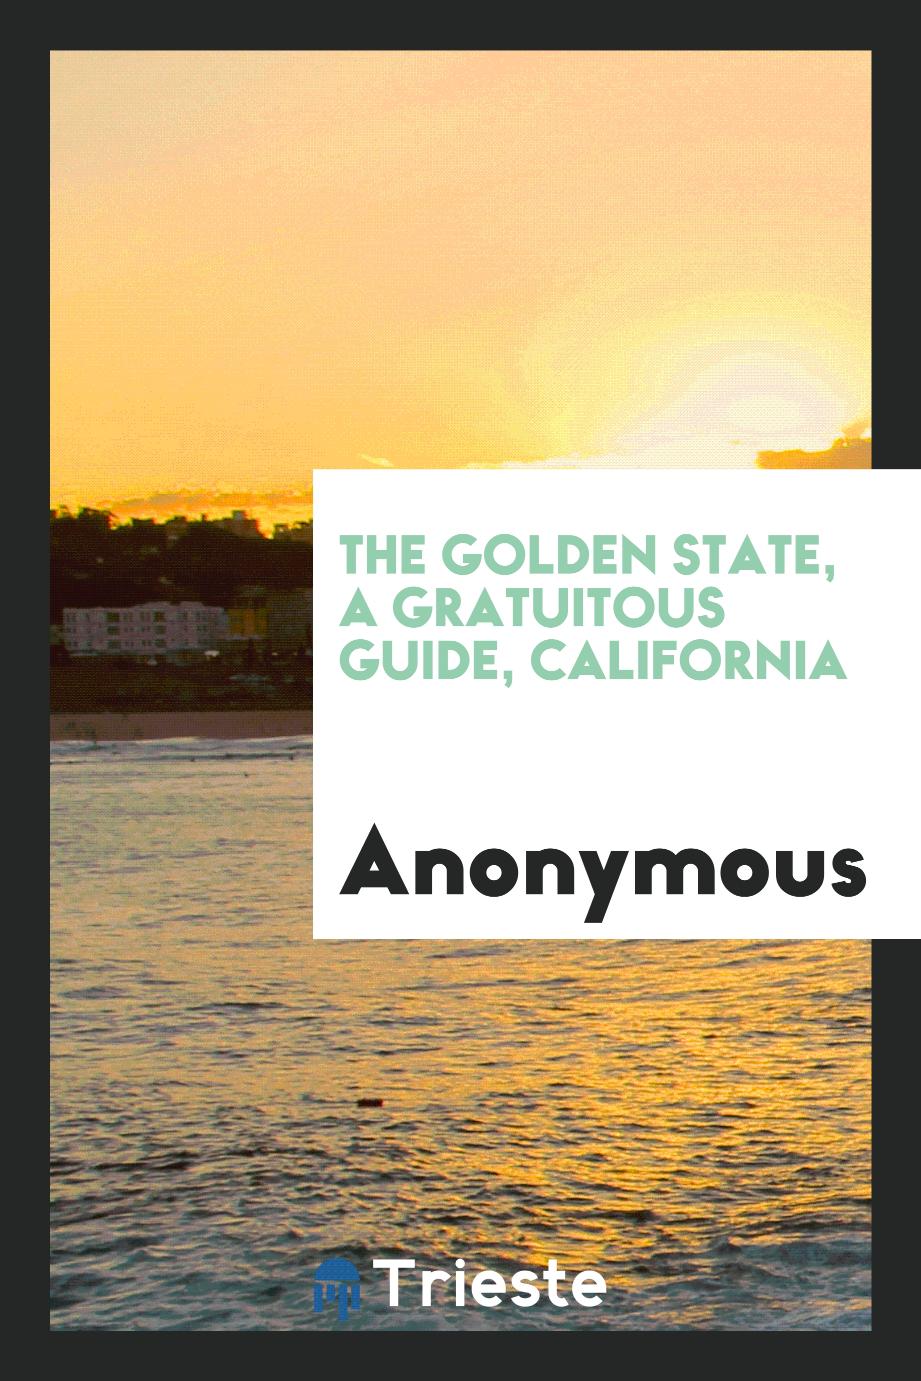 The Golden State, a Gratuitous Guide, California